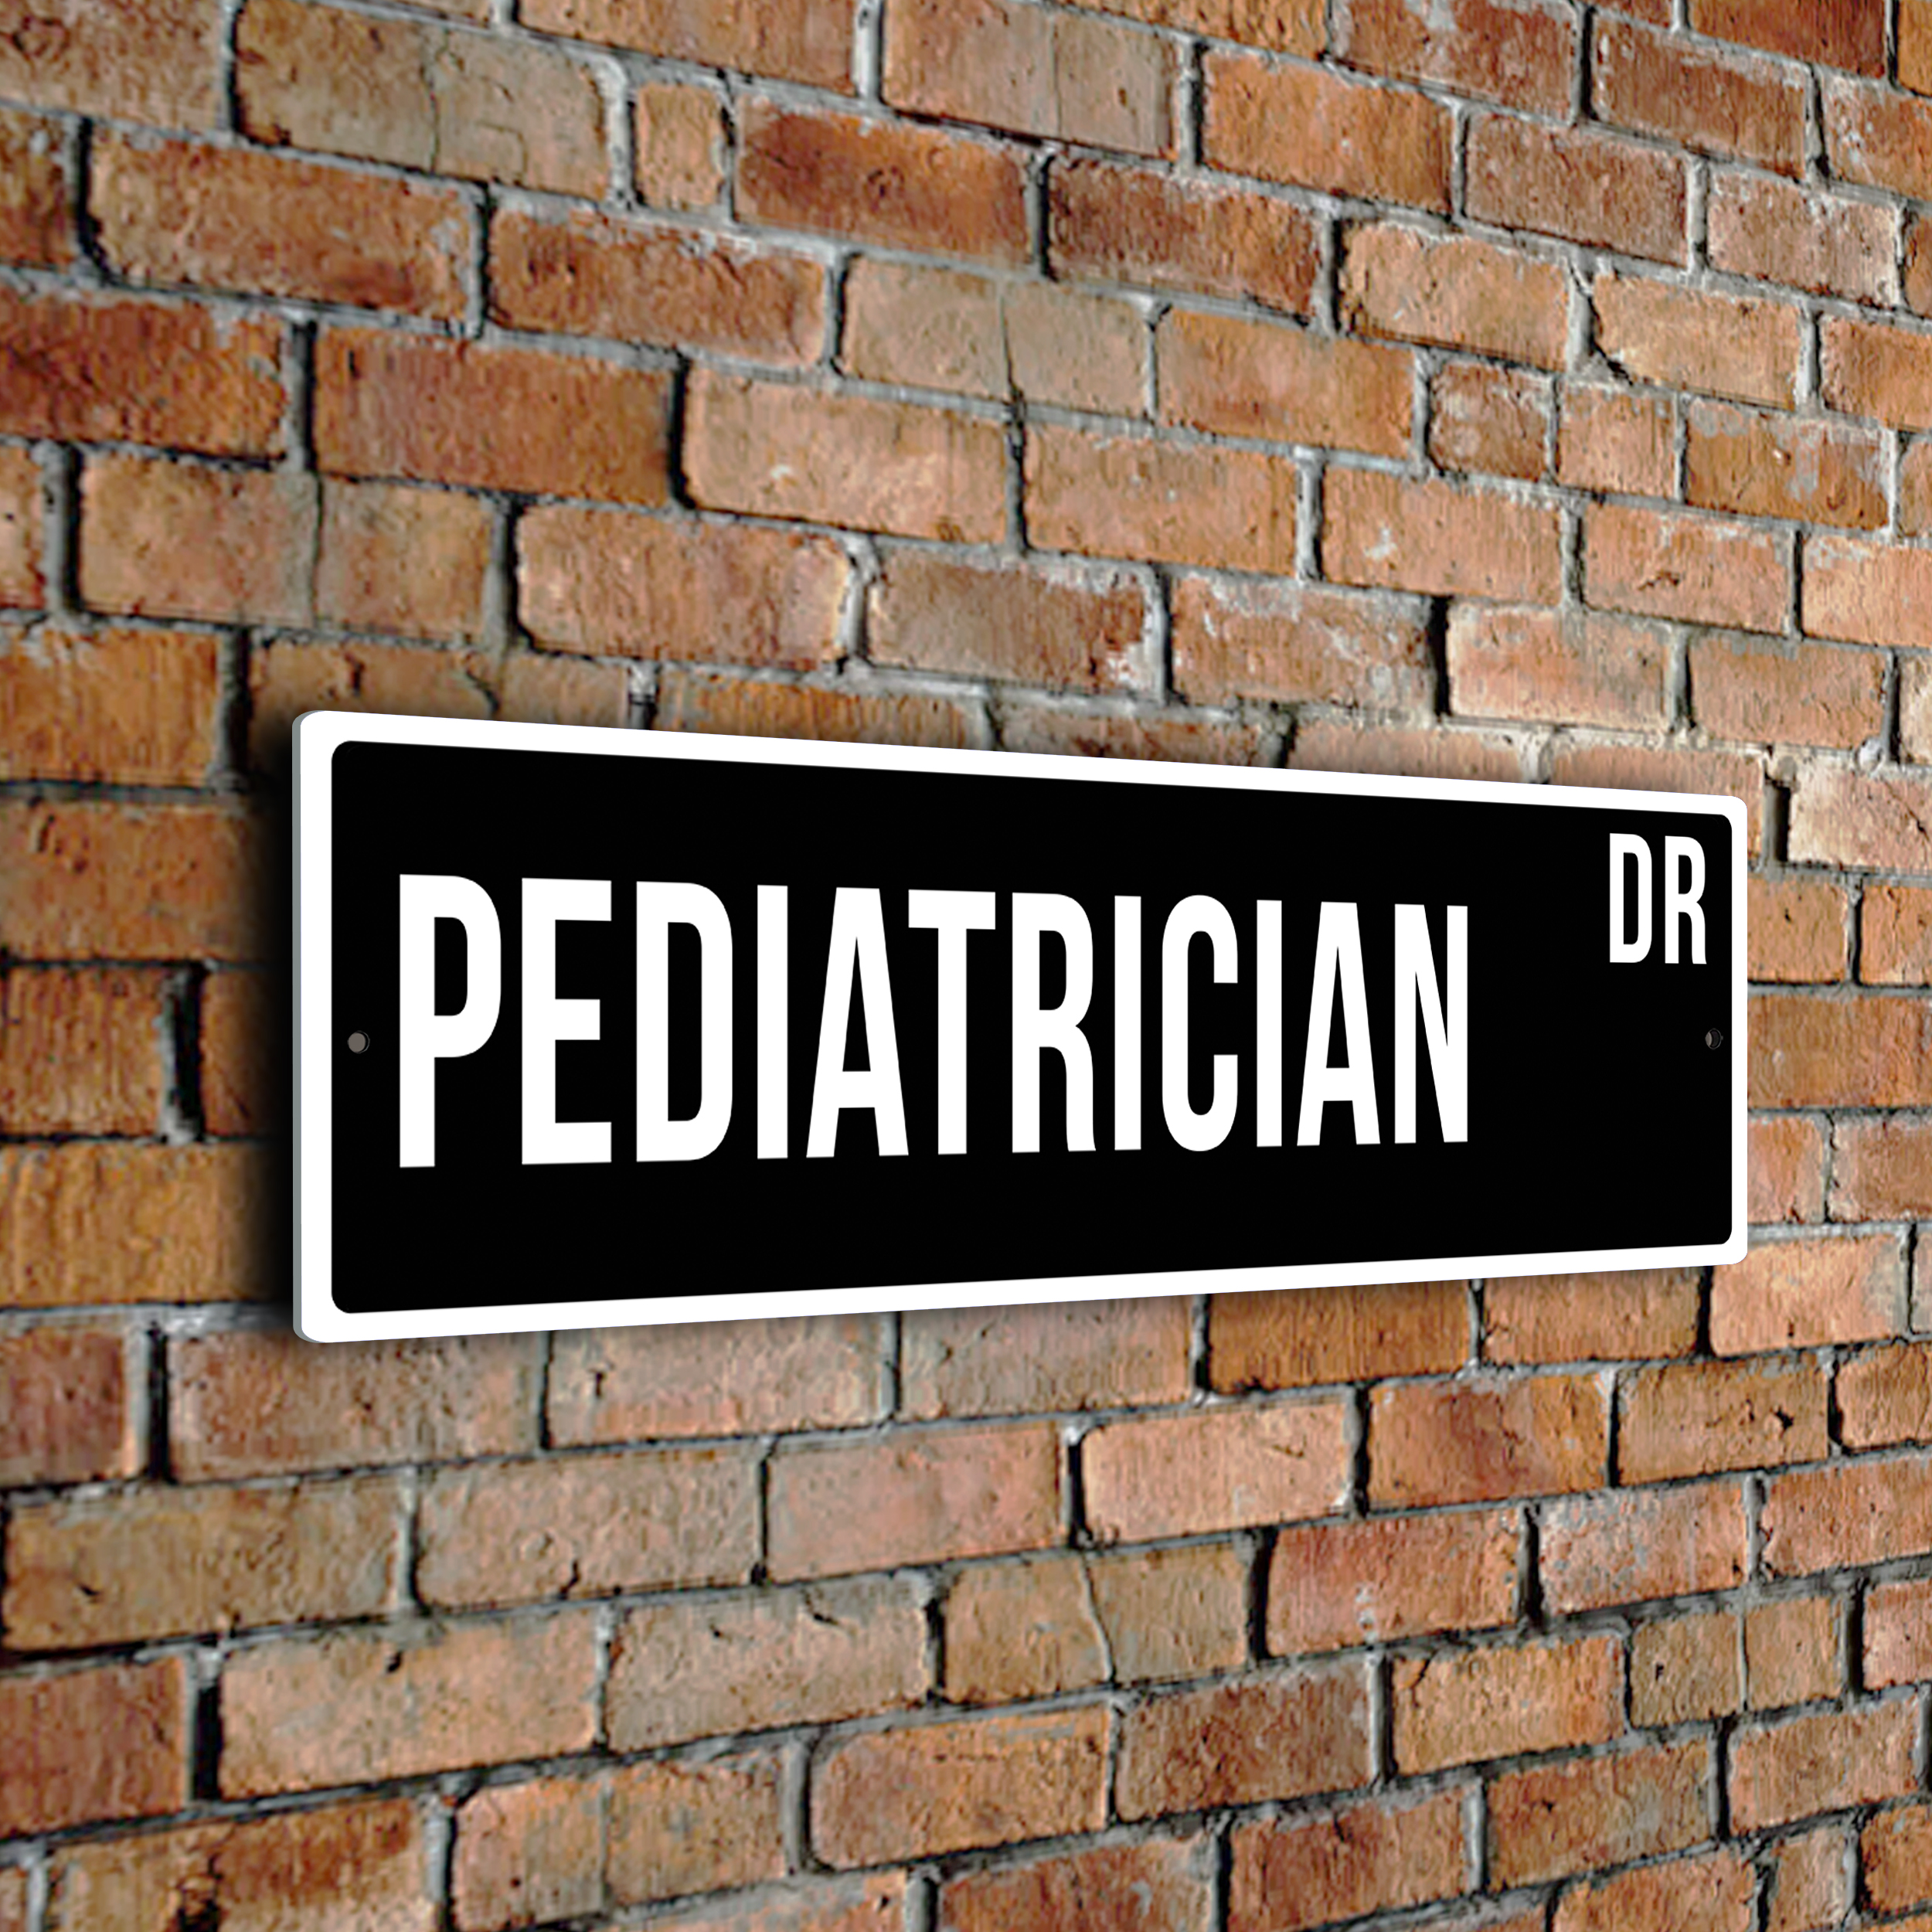 Pediatrician street sign